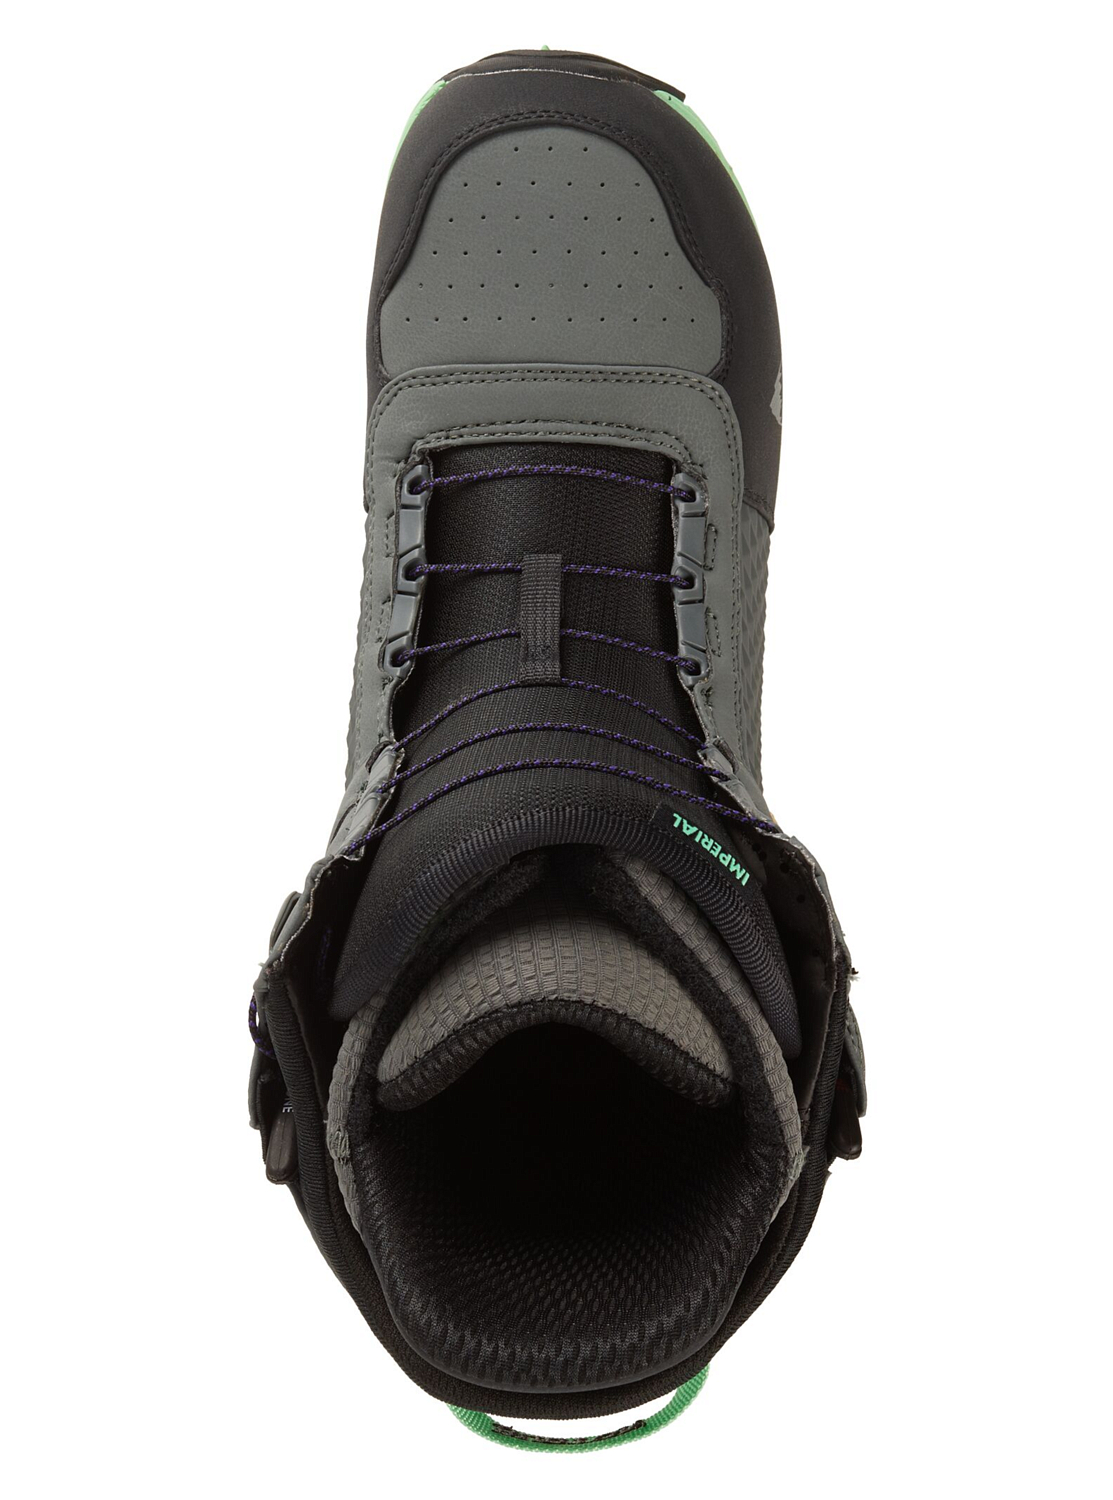 Ботинки для сноуборда BURTON 2019-20 Imperial Gray/Green